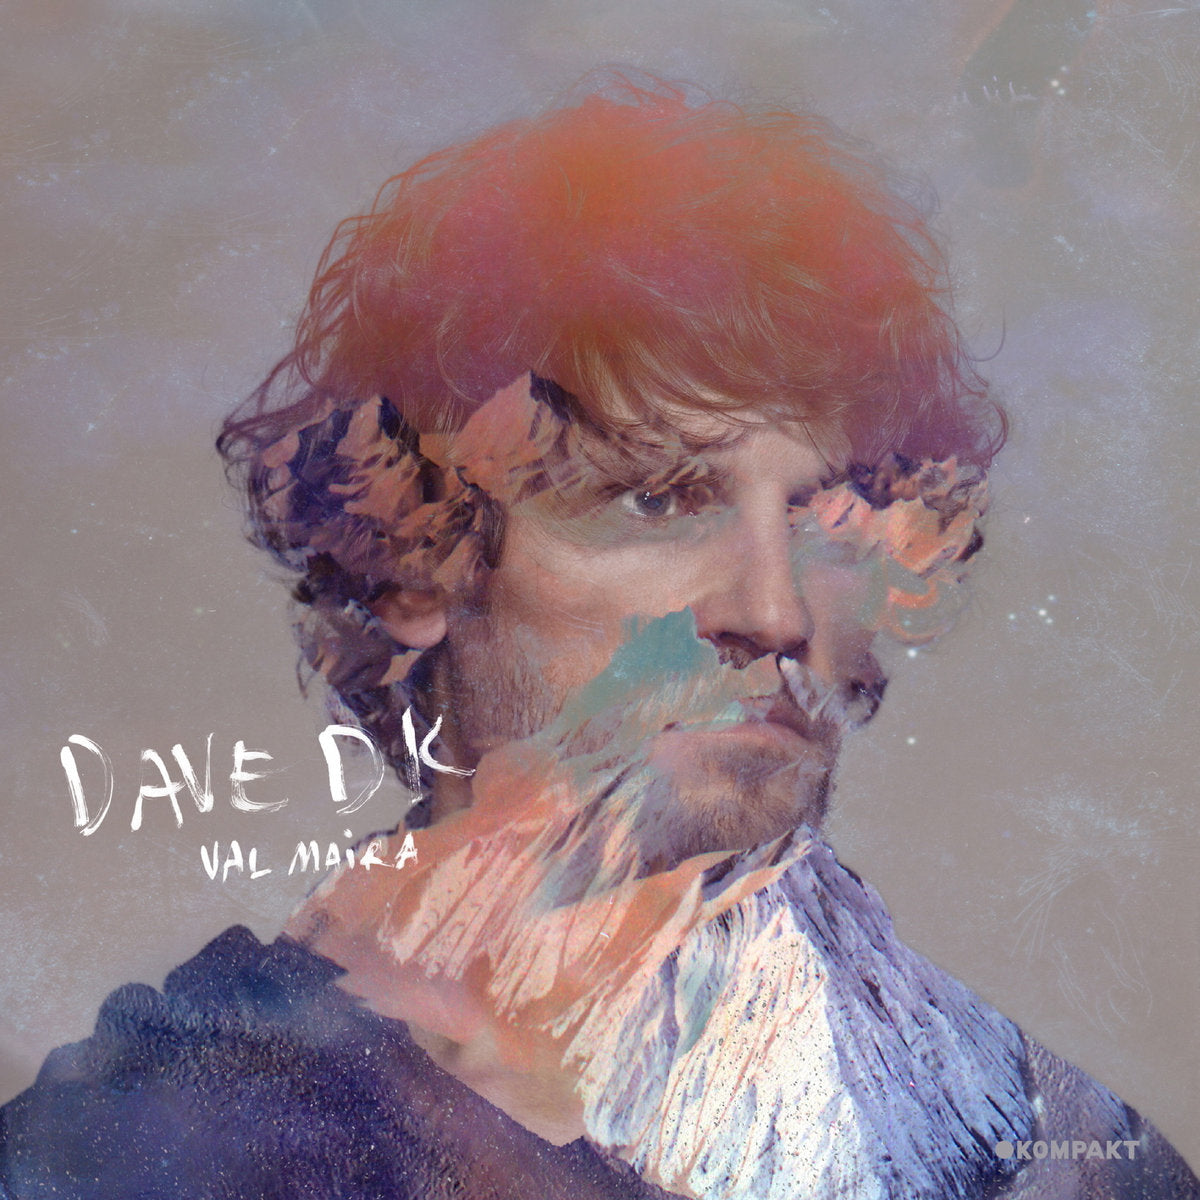 Dave DK – Val Maira